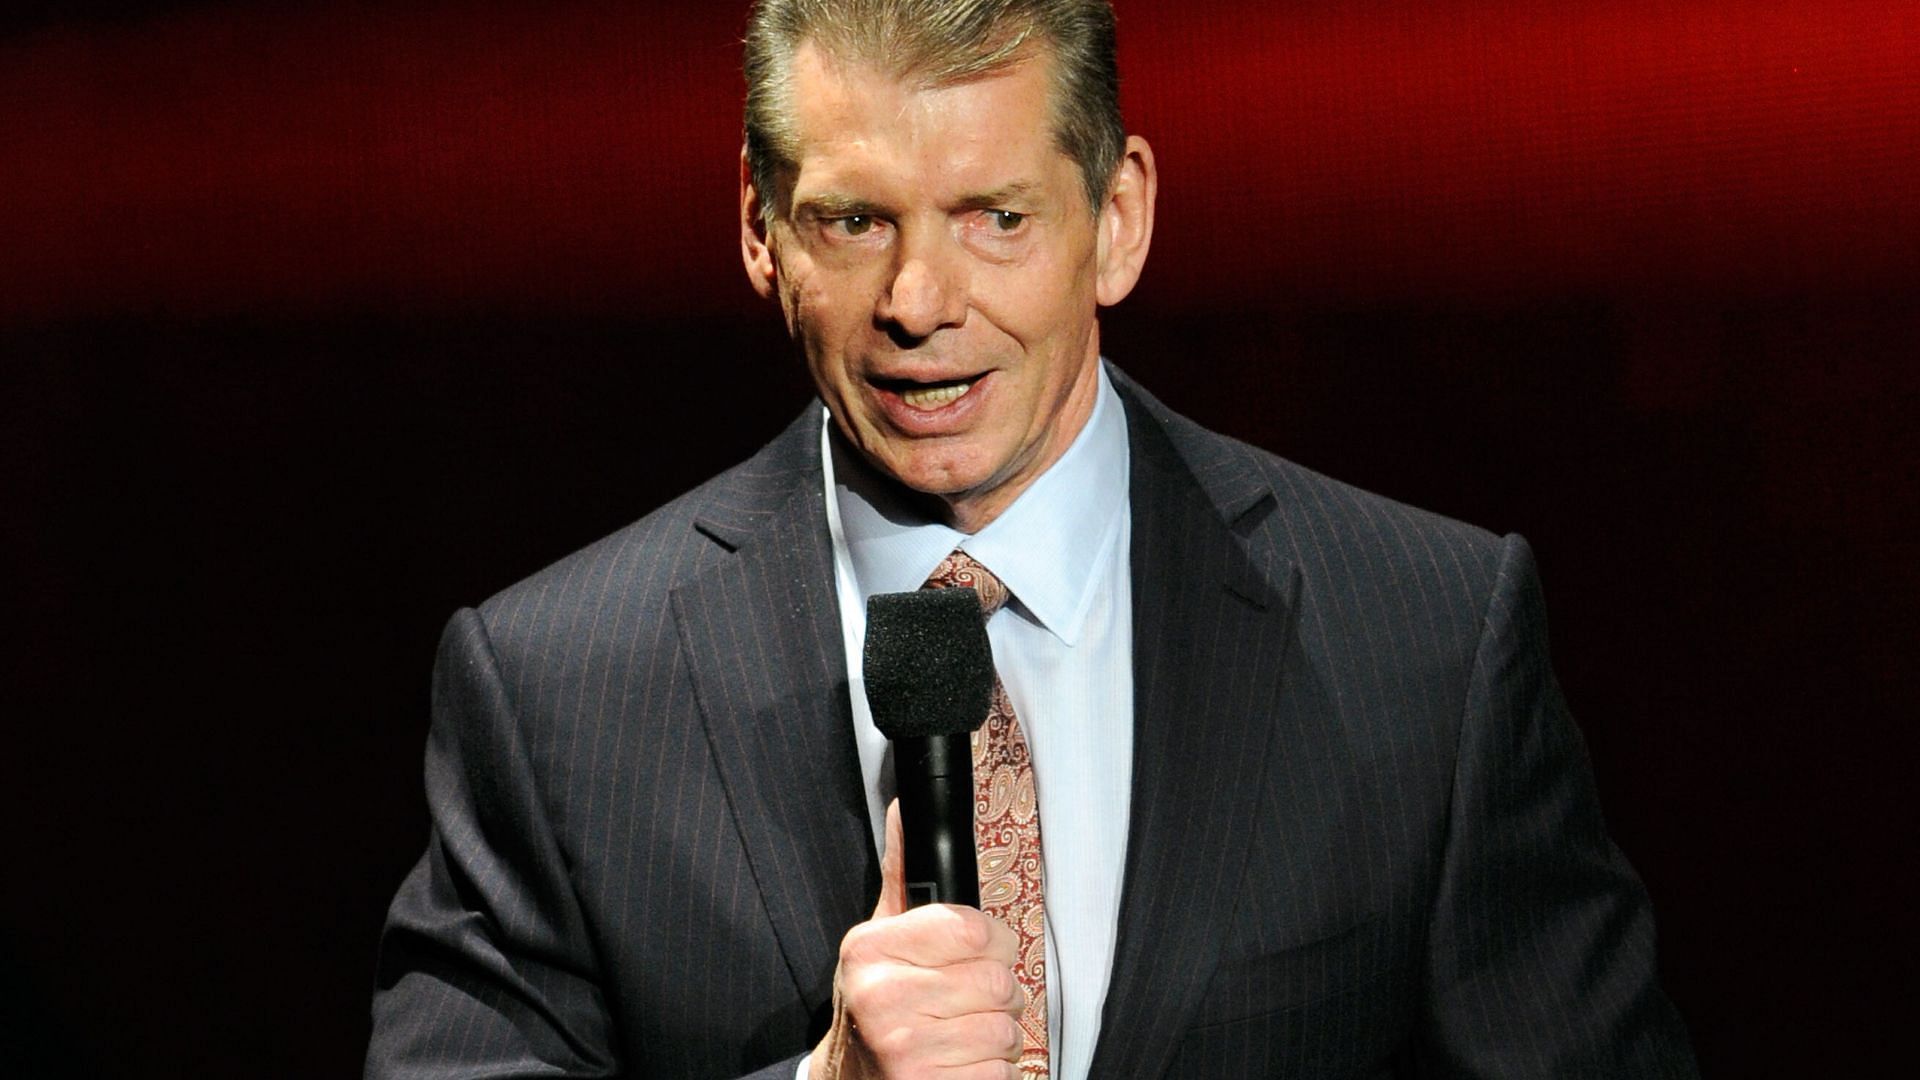 Former WWE CEO Vince McMahon retired last week